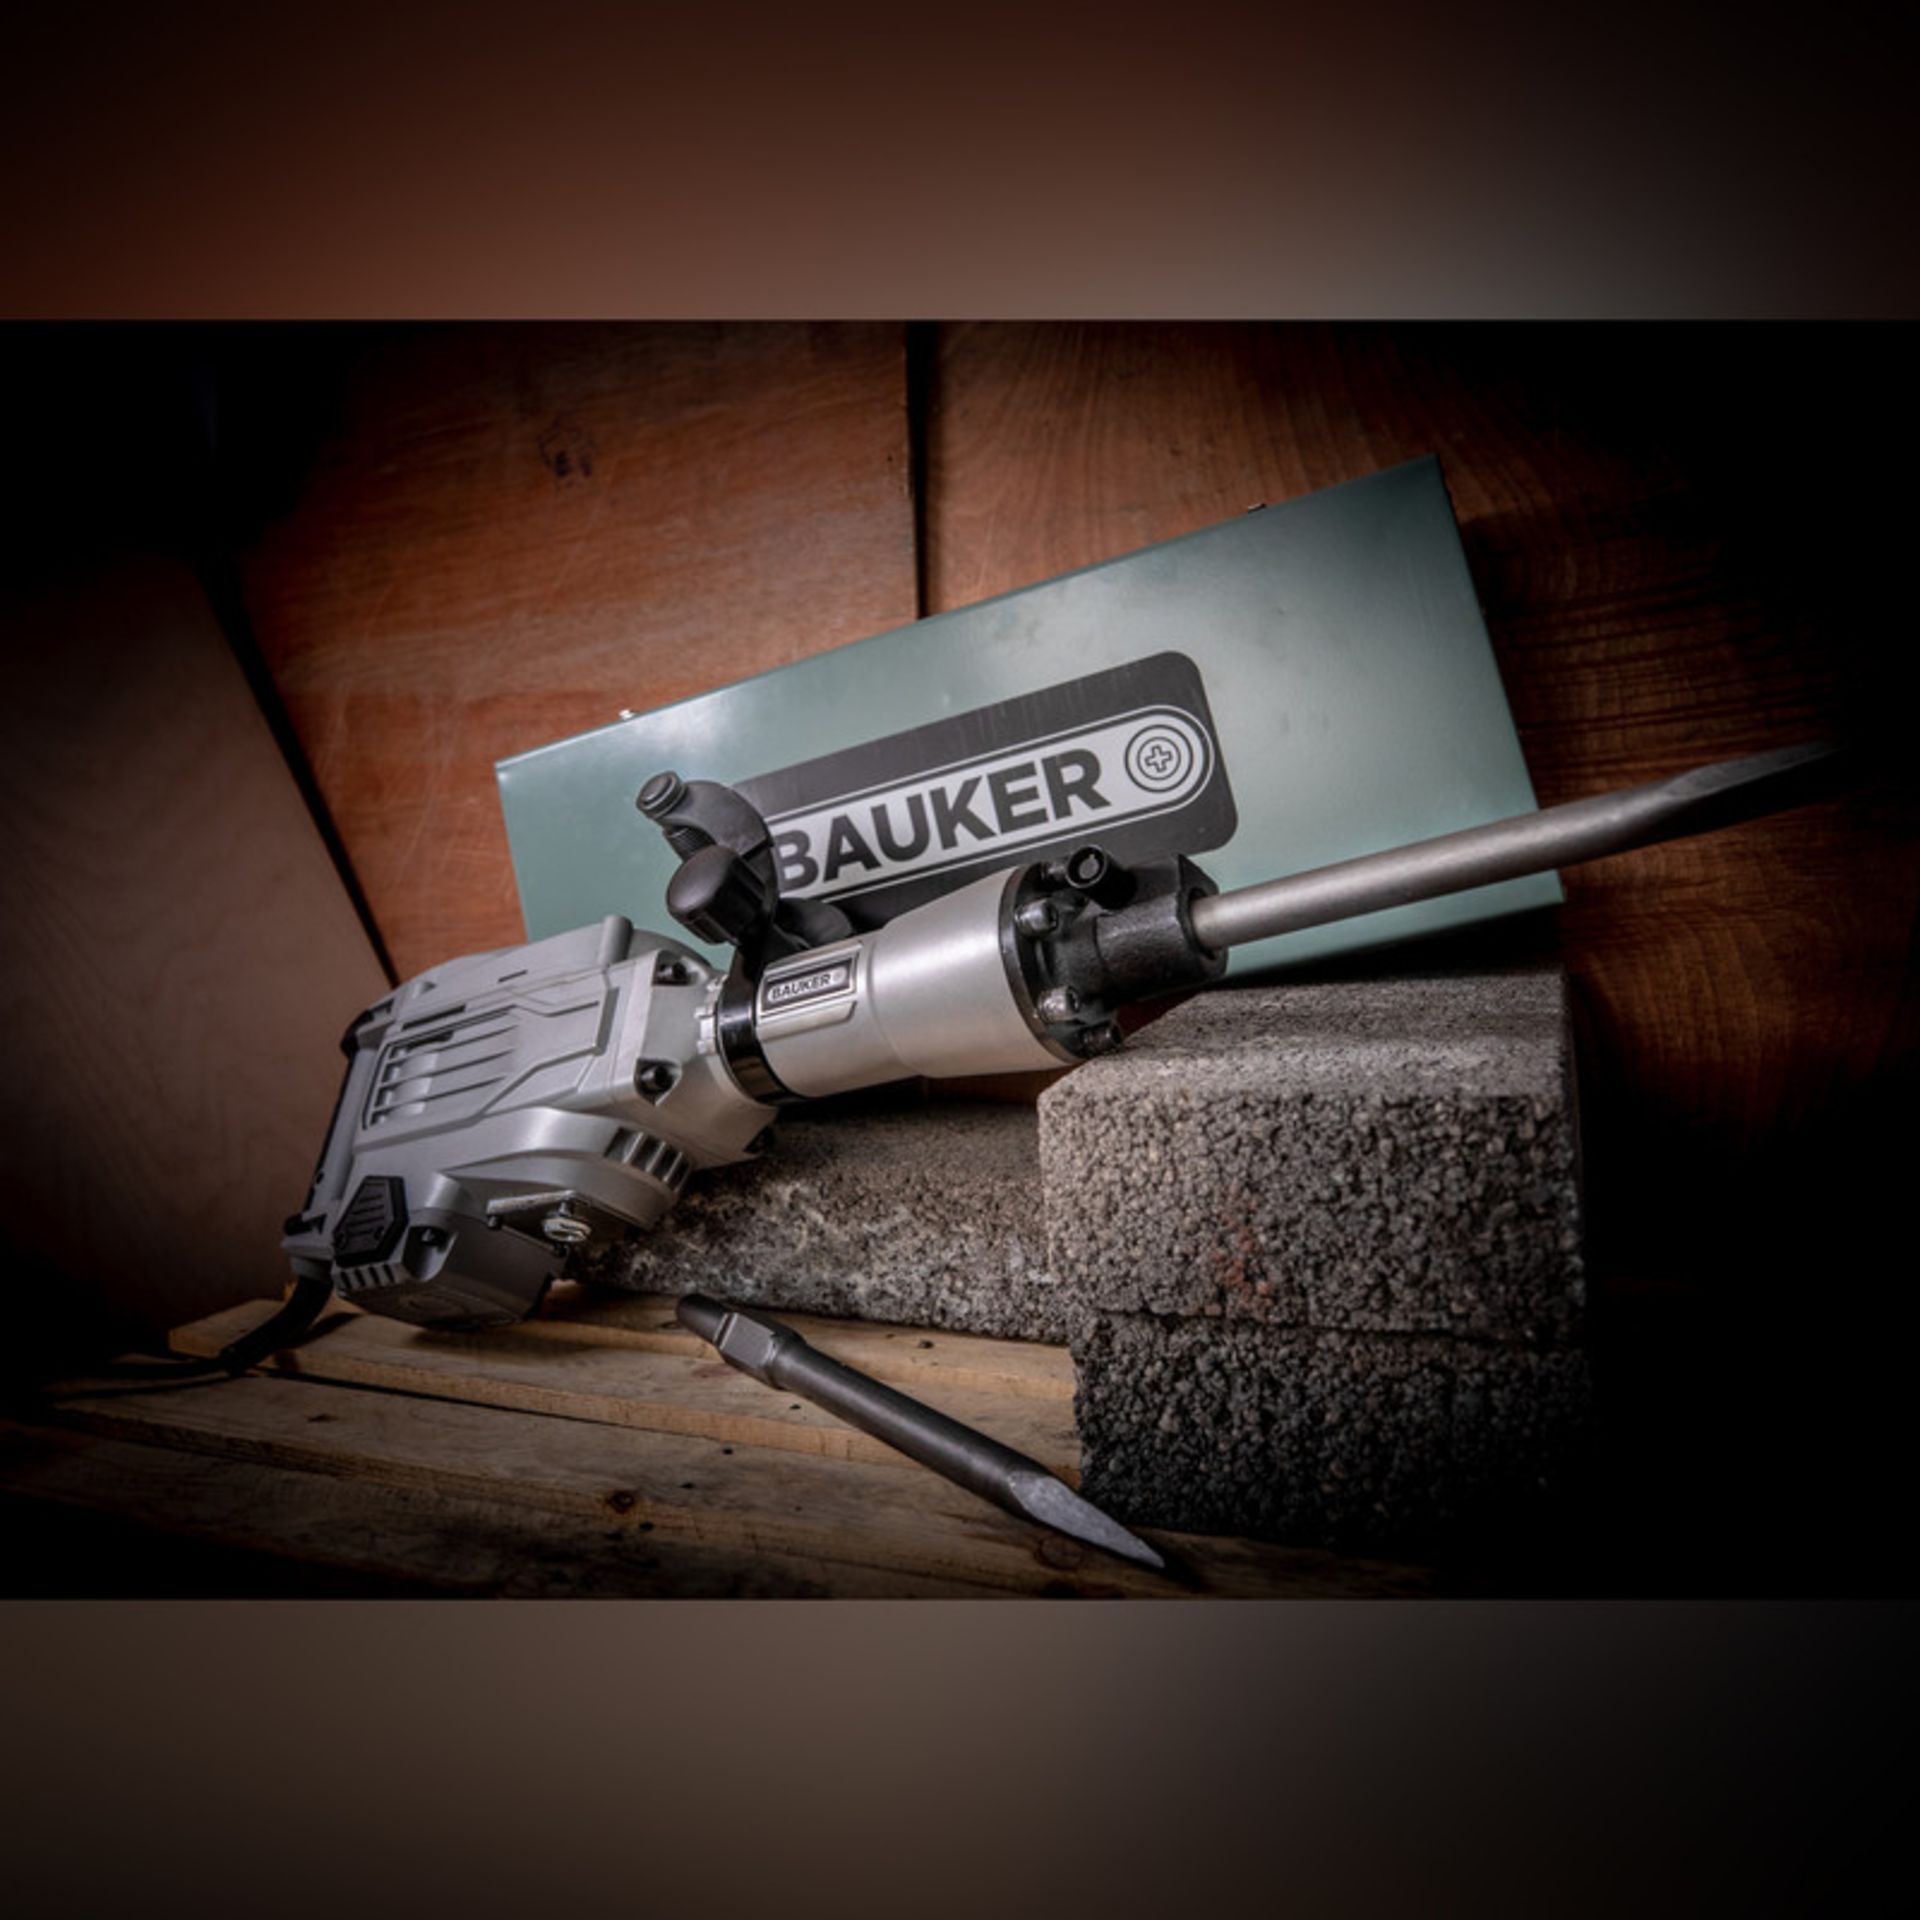 Bauker 1700W 15kg Breaker 240V. • Max 50J, 1400bpm, 30mm chuck • Anti-vibration handle, adjustable - Image 2 of 2